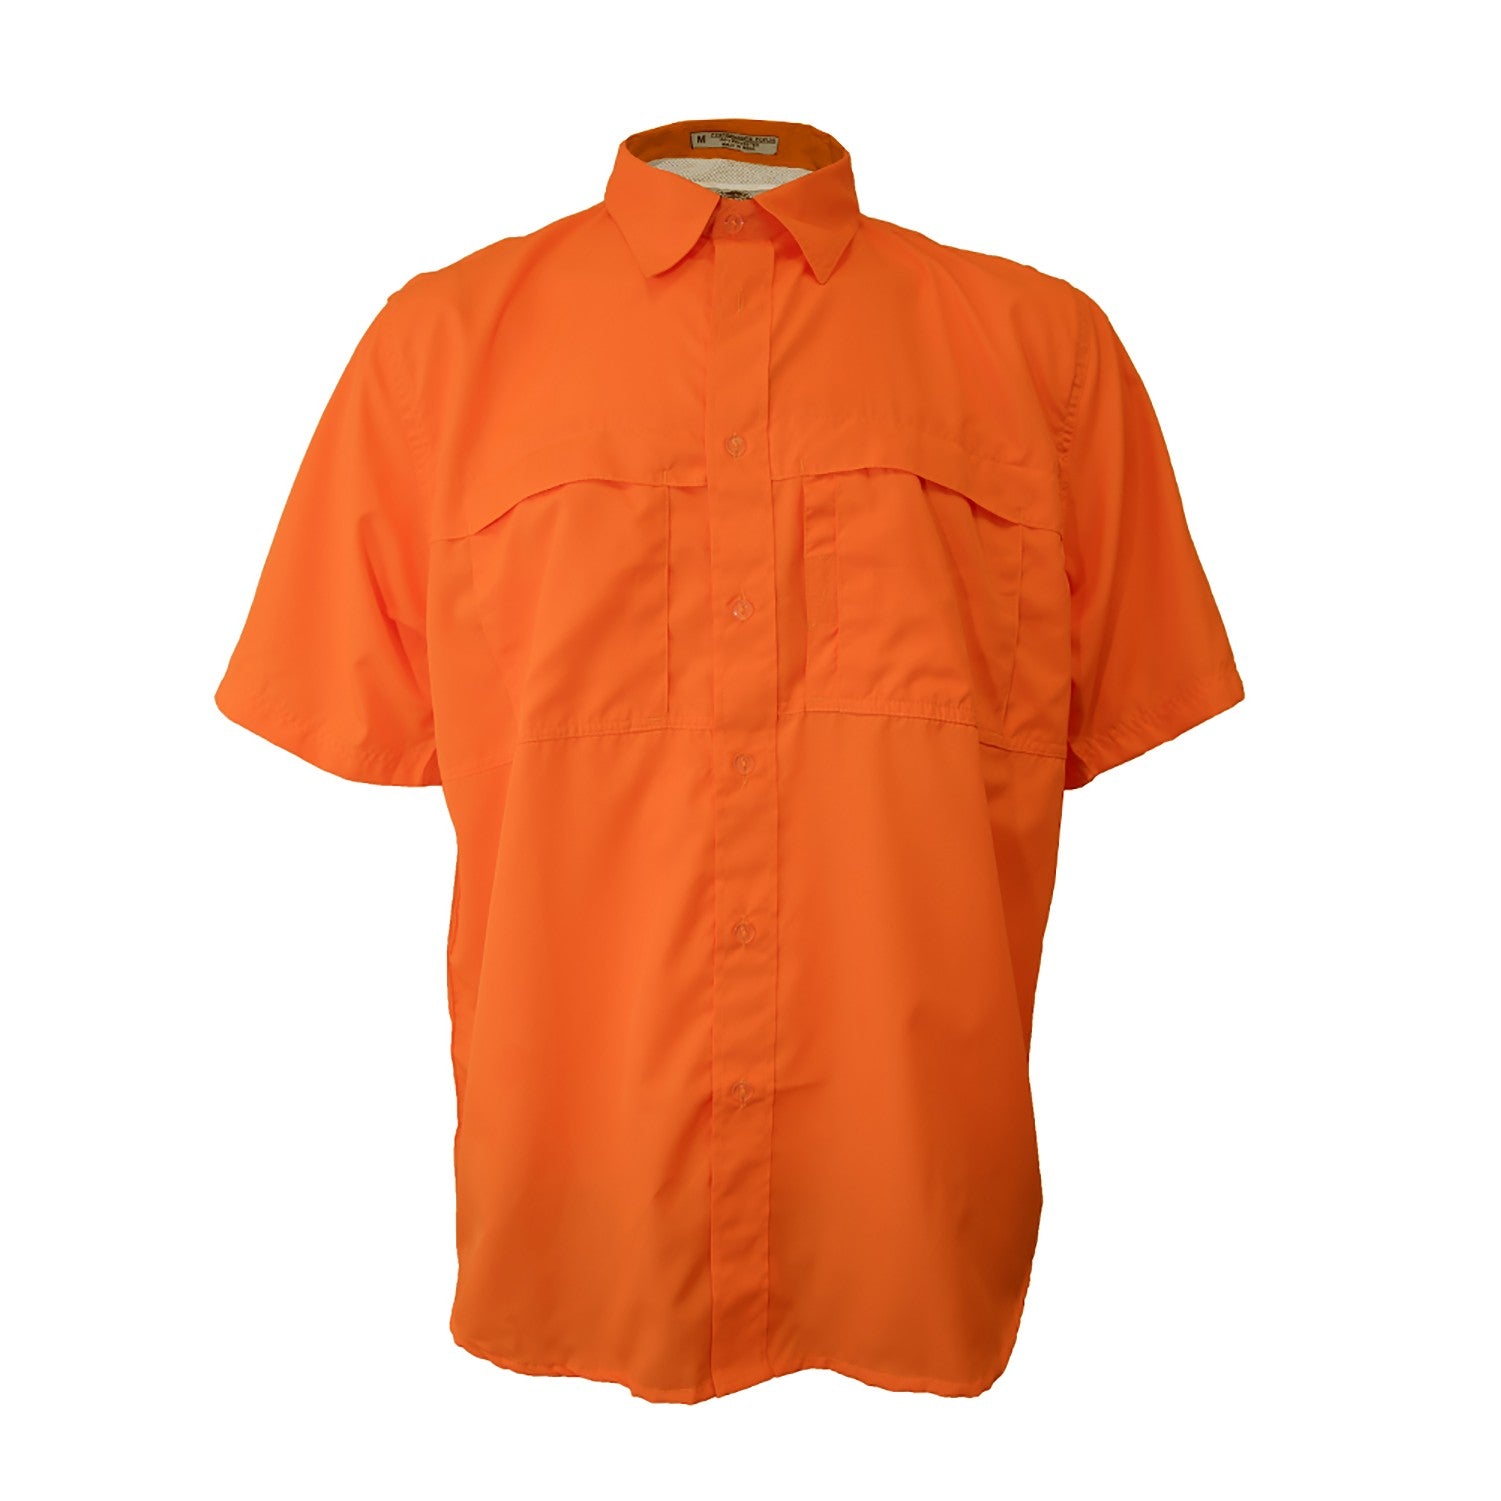 Hook & Tackle Yellow Fishing Button Up Shirt Size XL Short Sleeve-Hi Tech  Vented